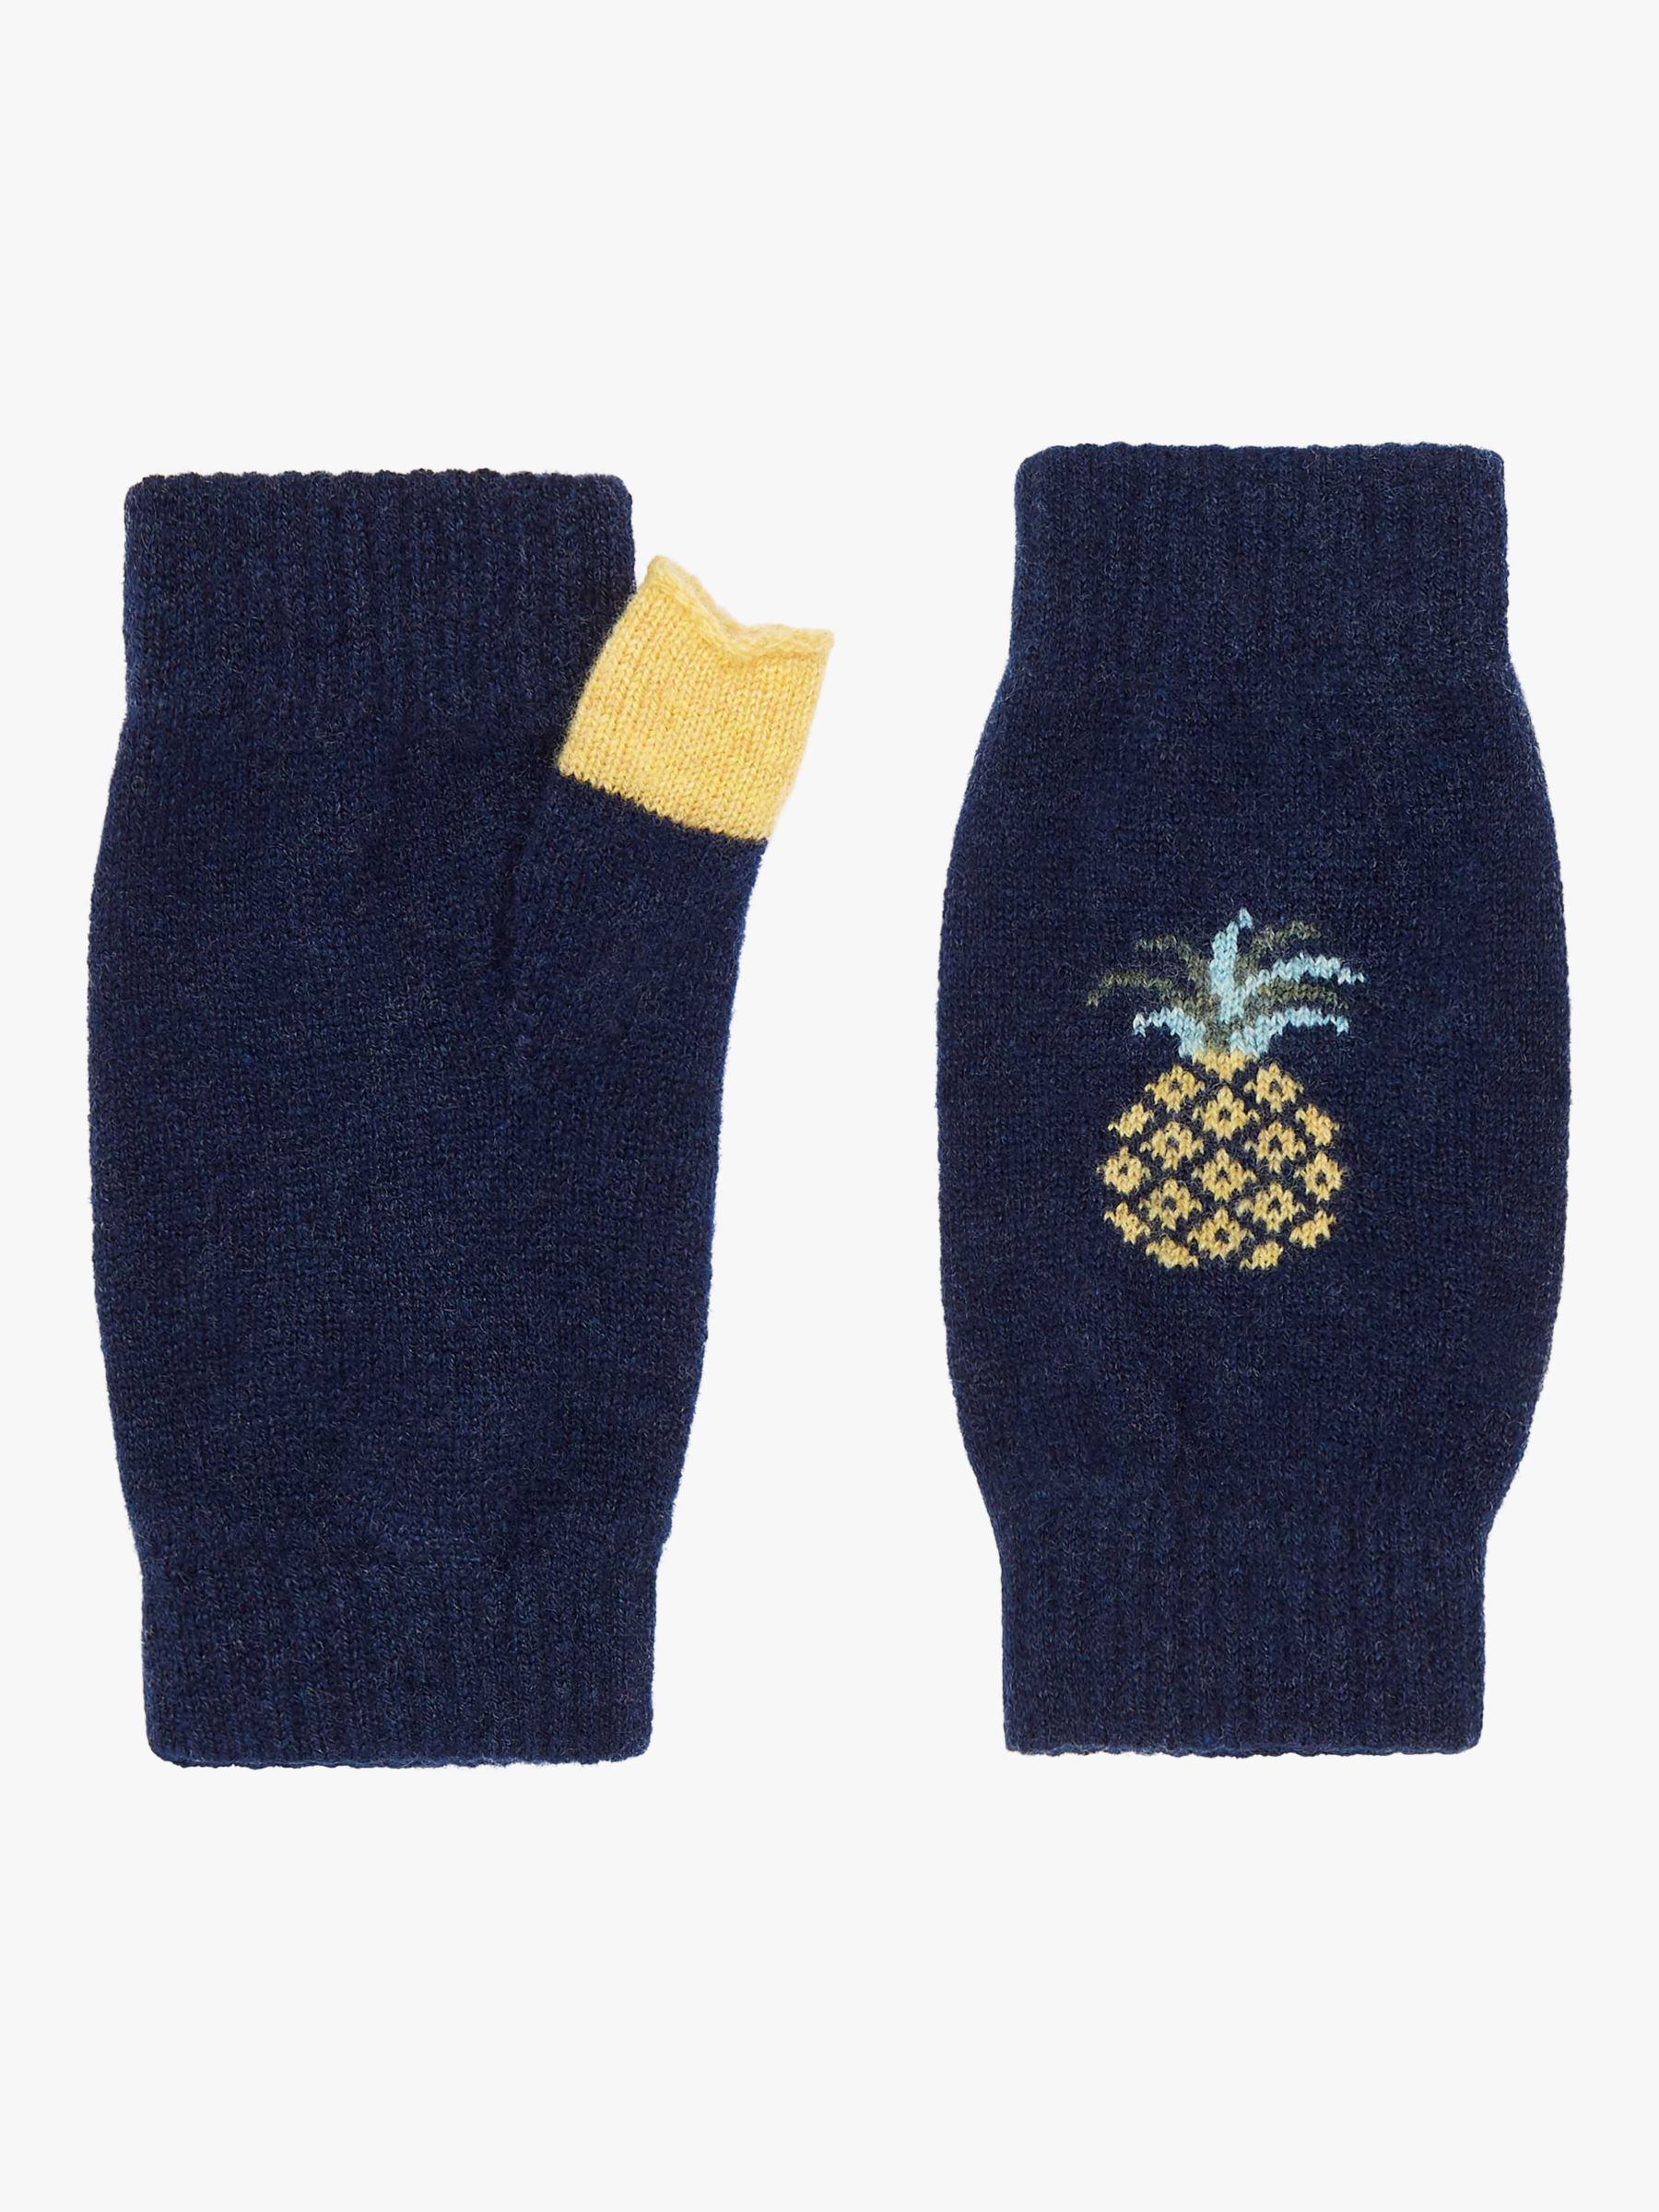 Brora Cashmere Pineapple Wrist Warmer Gloves, French Navy